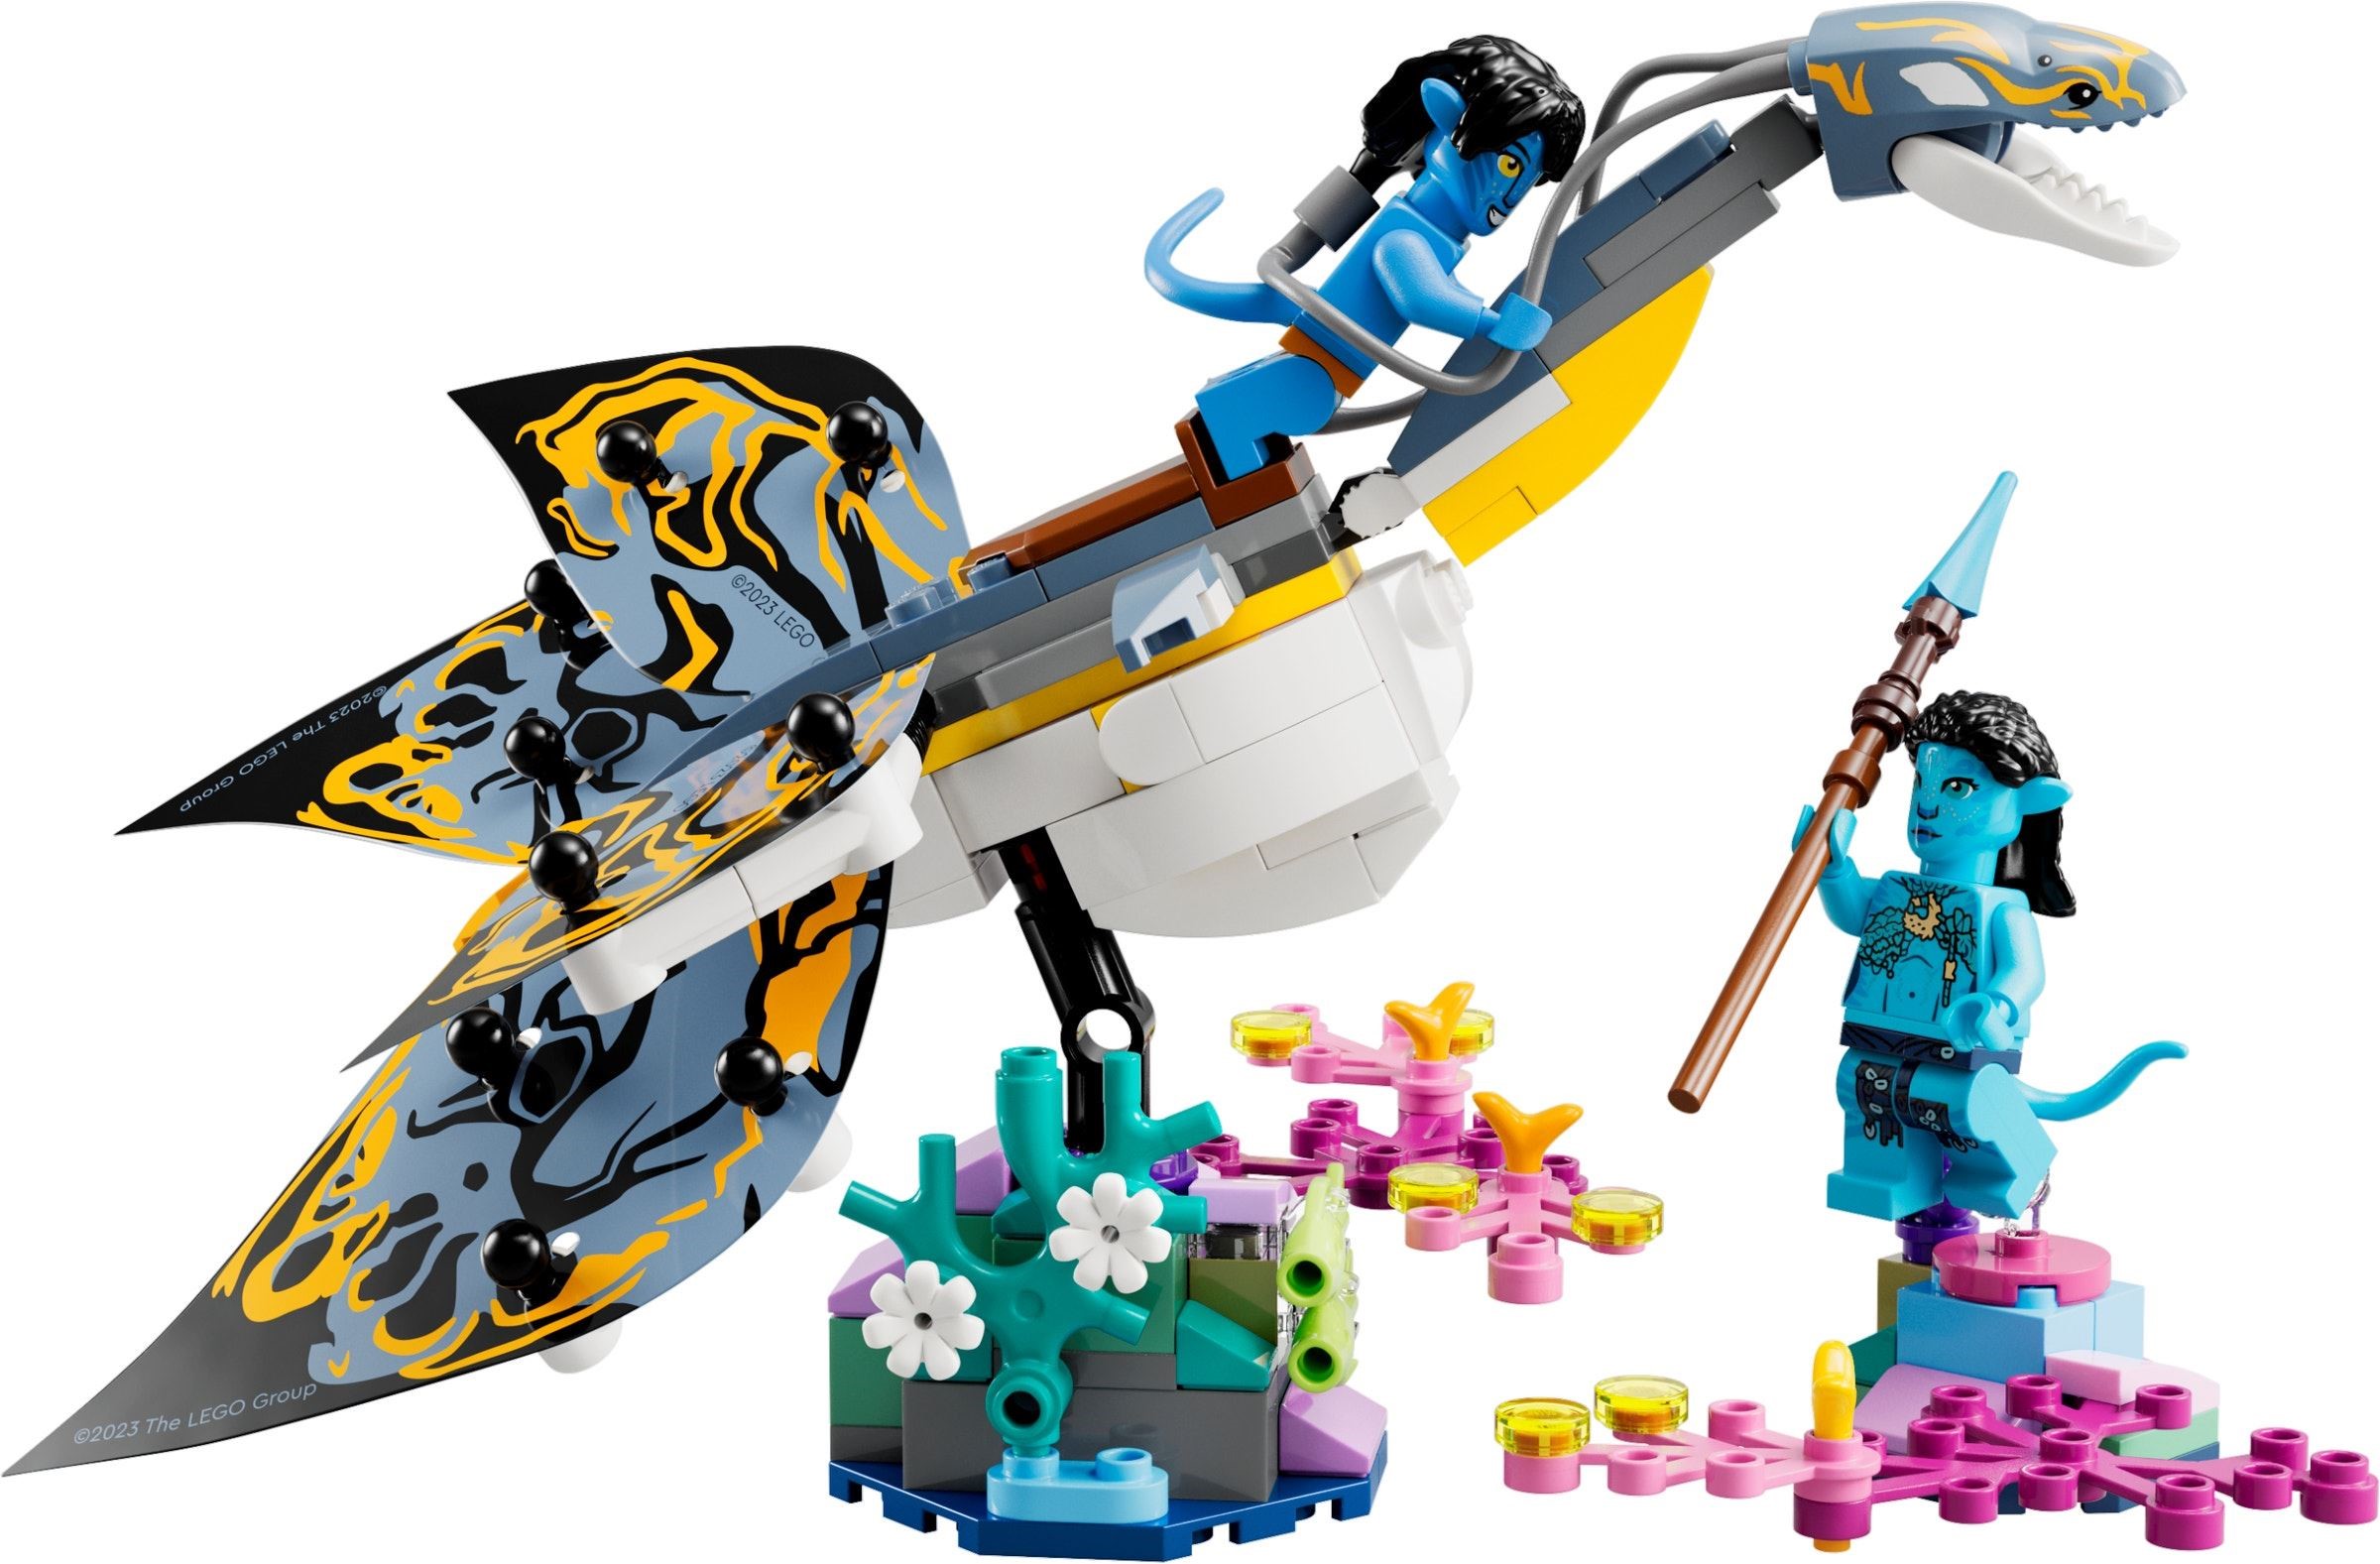 LEGO Avatar Minifigure avt004 Neytiri (75574)